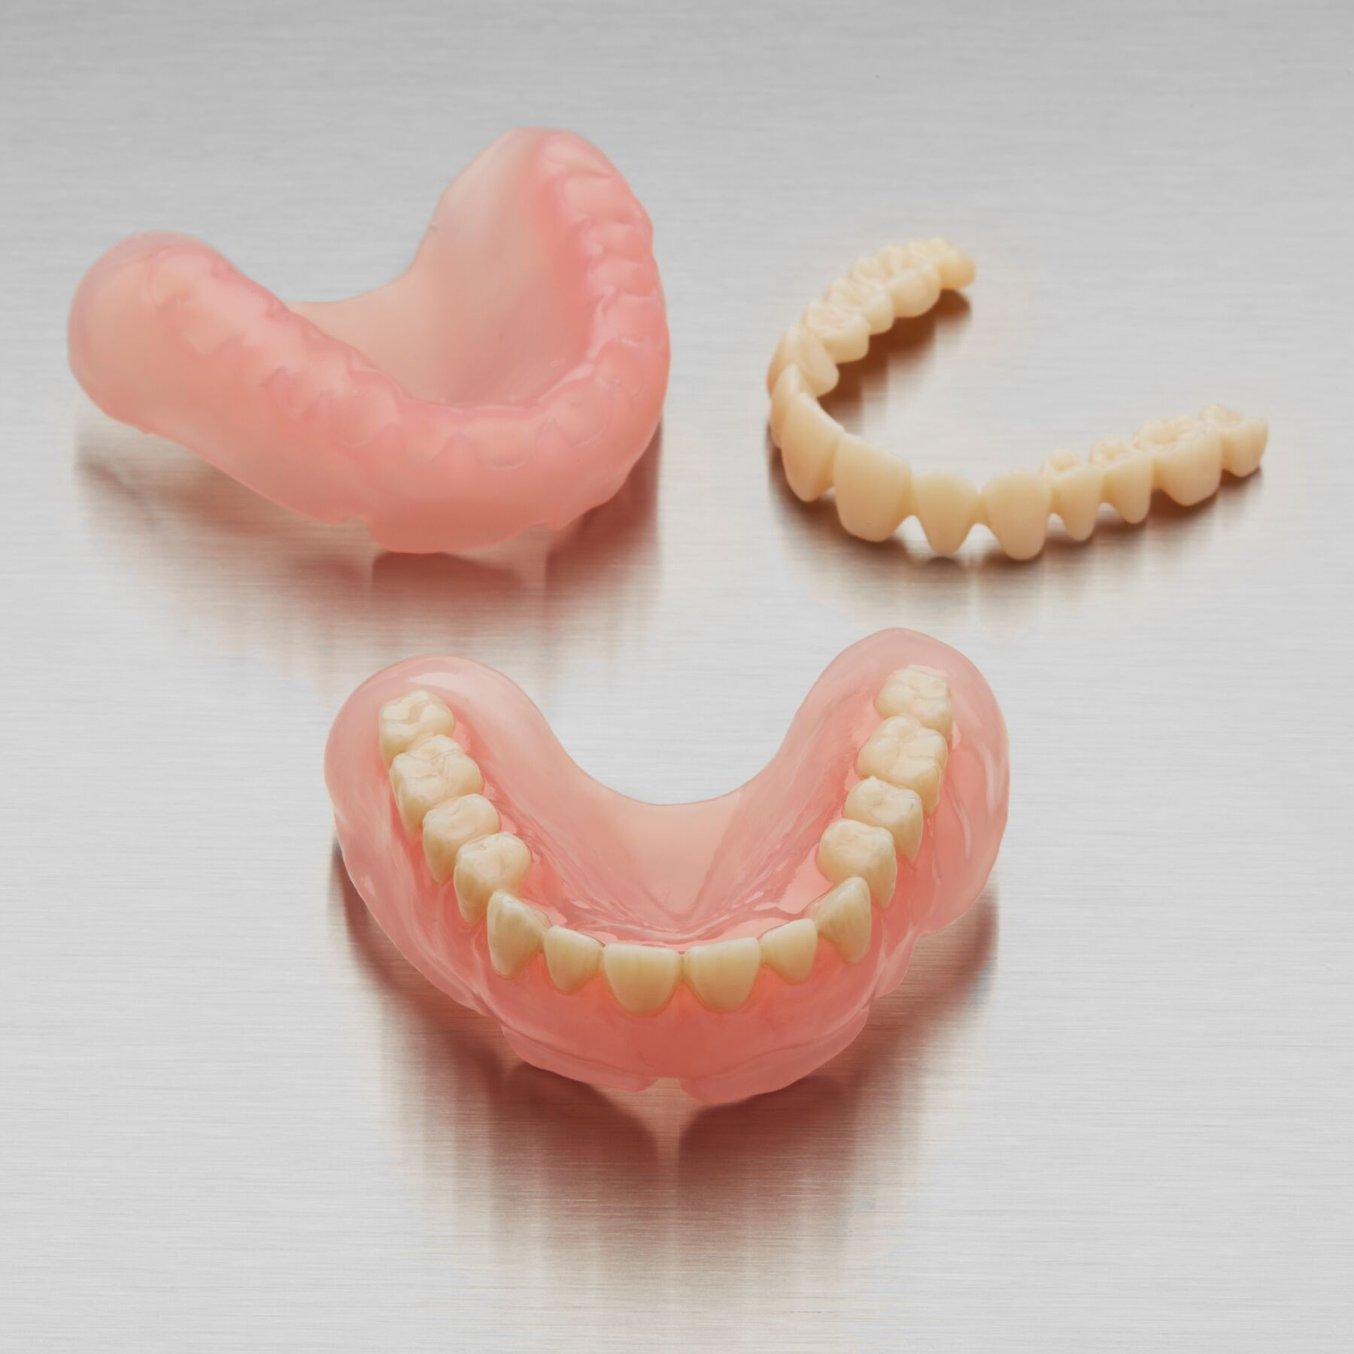 Digital Dentures - 3D printing